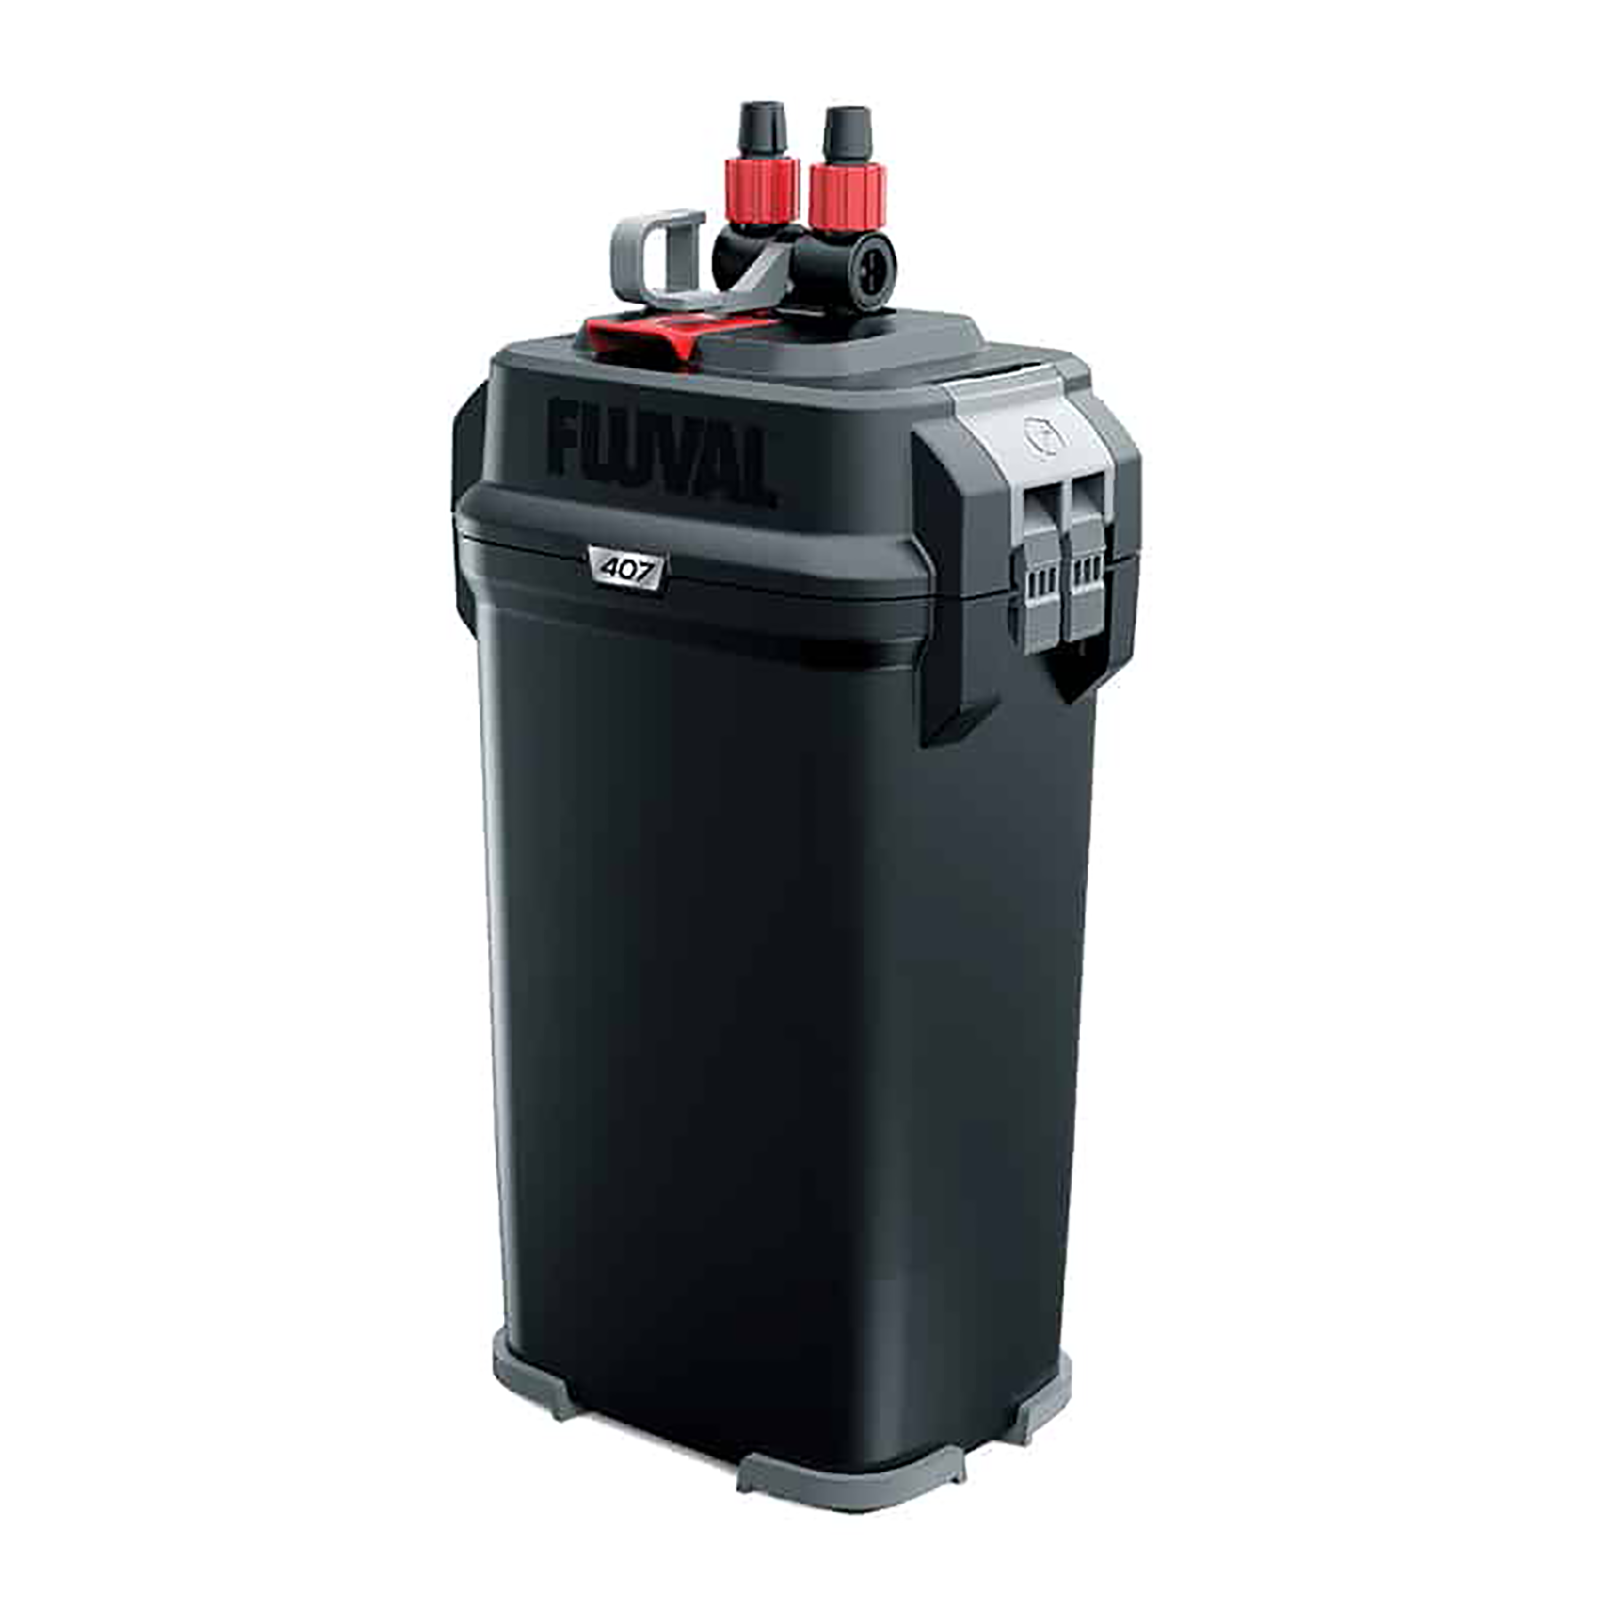 Fluval 407 External Filter (150-500 L)